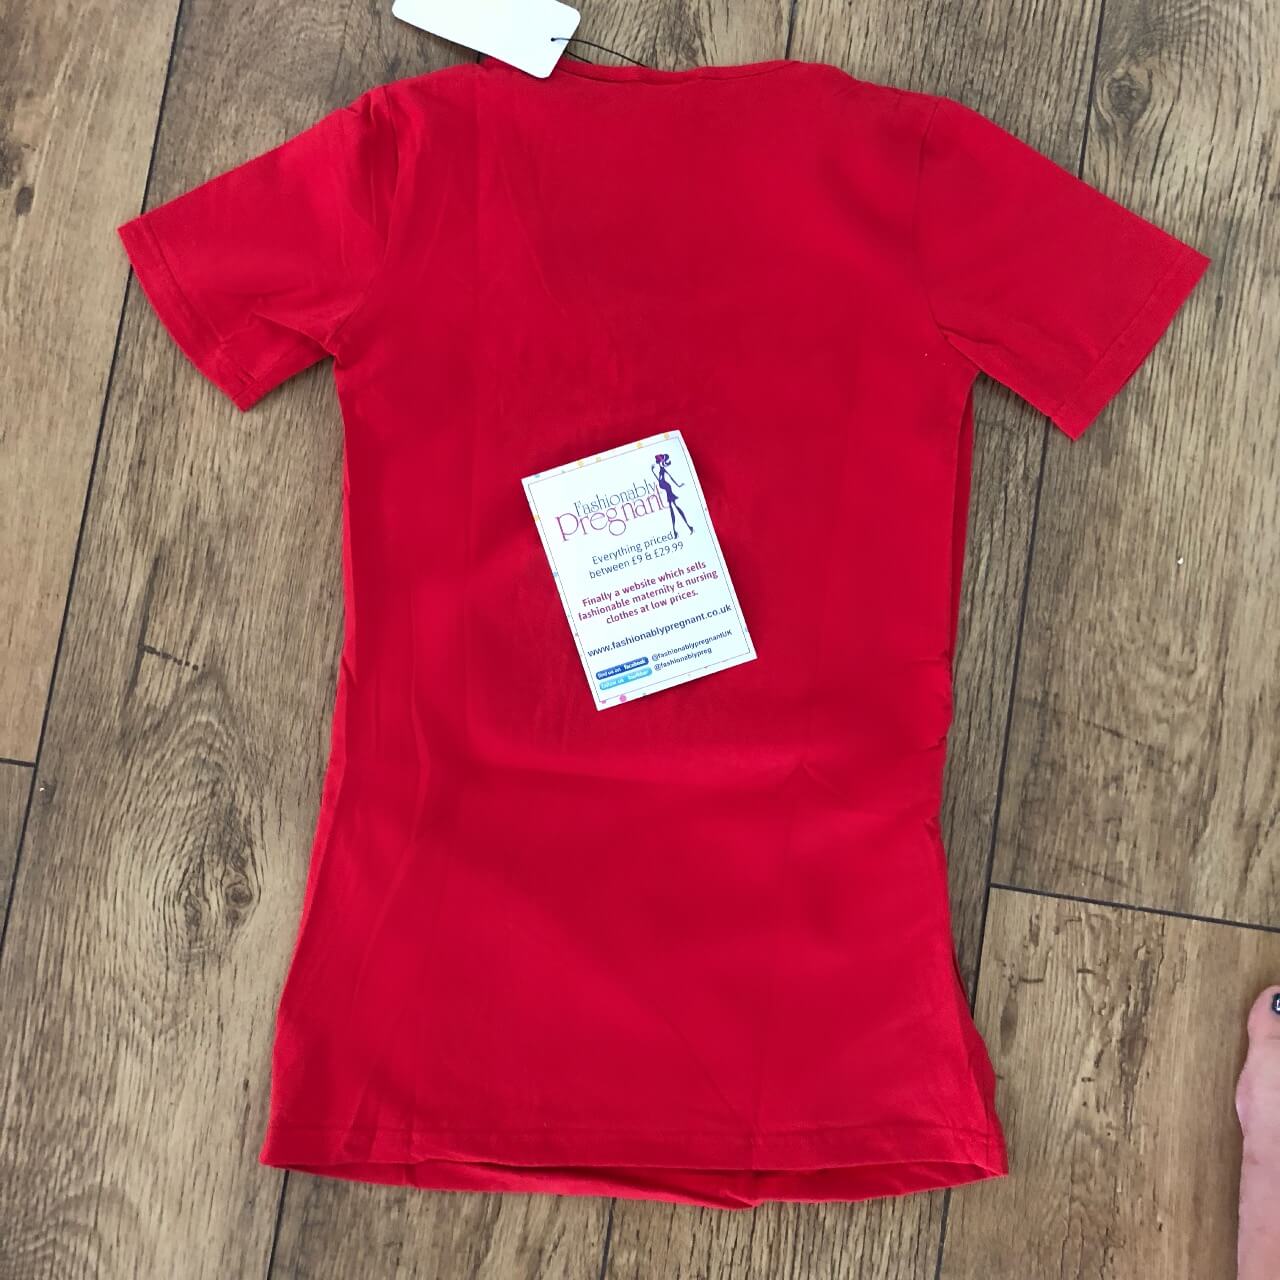 Fashionably Pregnant Short Sleeve Maternity & Breastfeeding Jersey Top - Red Tshirt, basic summer